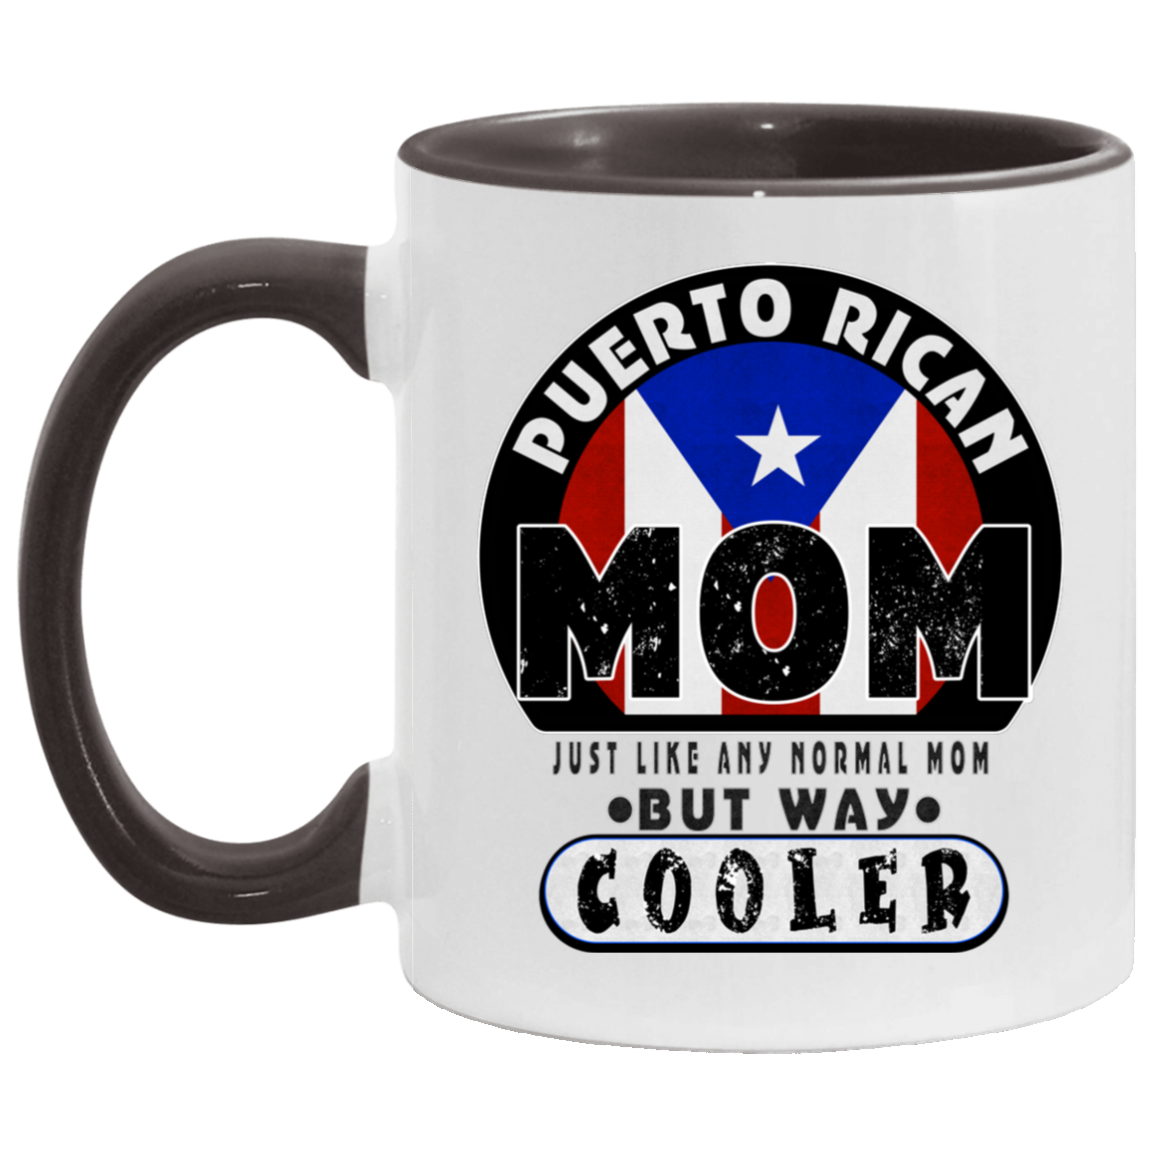 Cool Mom 11 OZ Accent Mug - Puerto Rican Pride